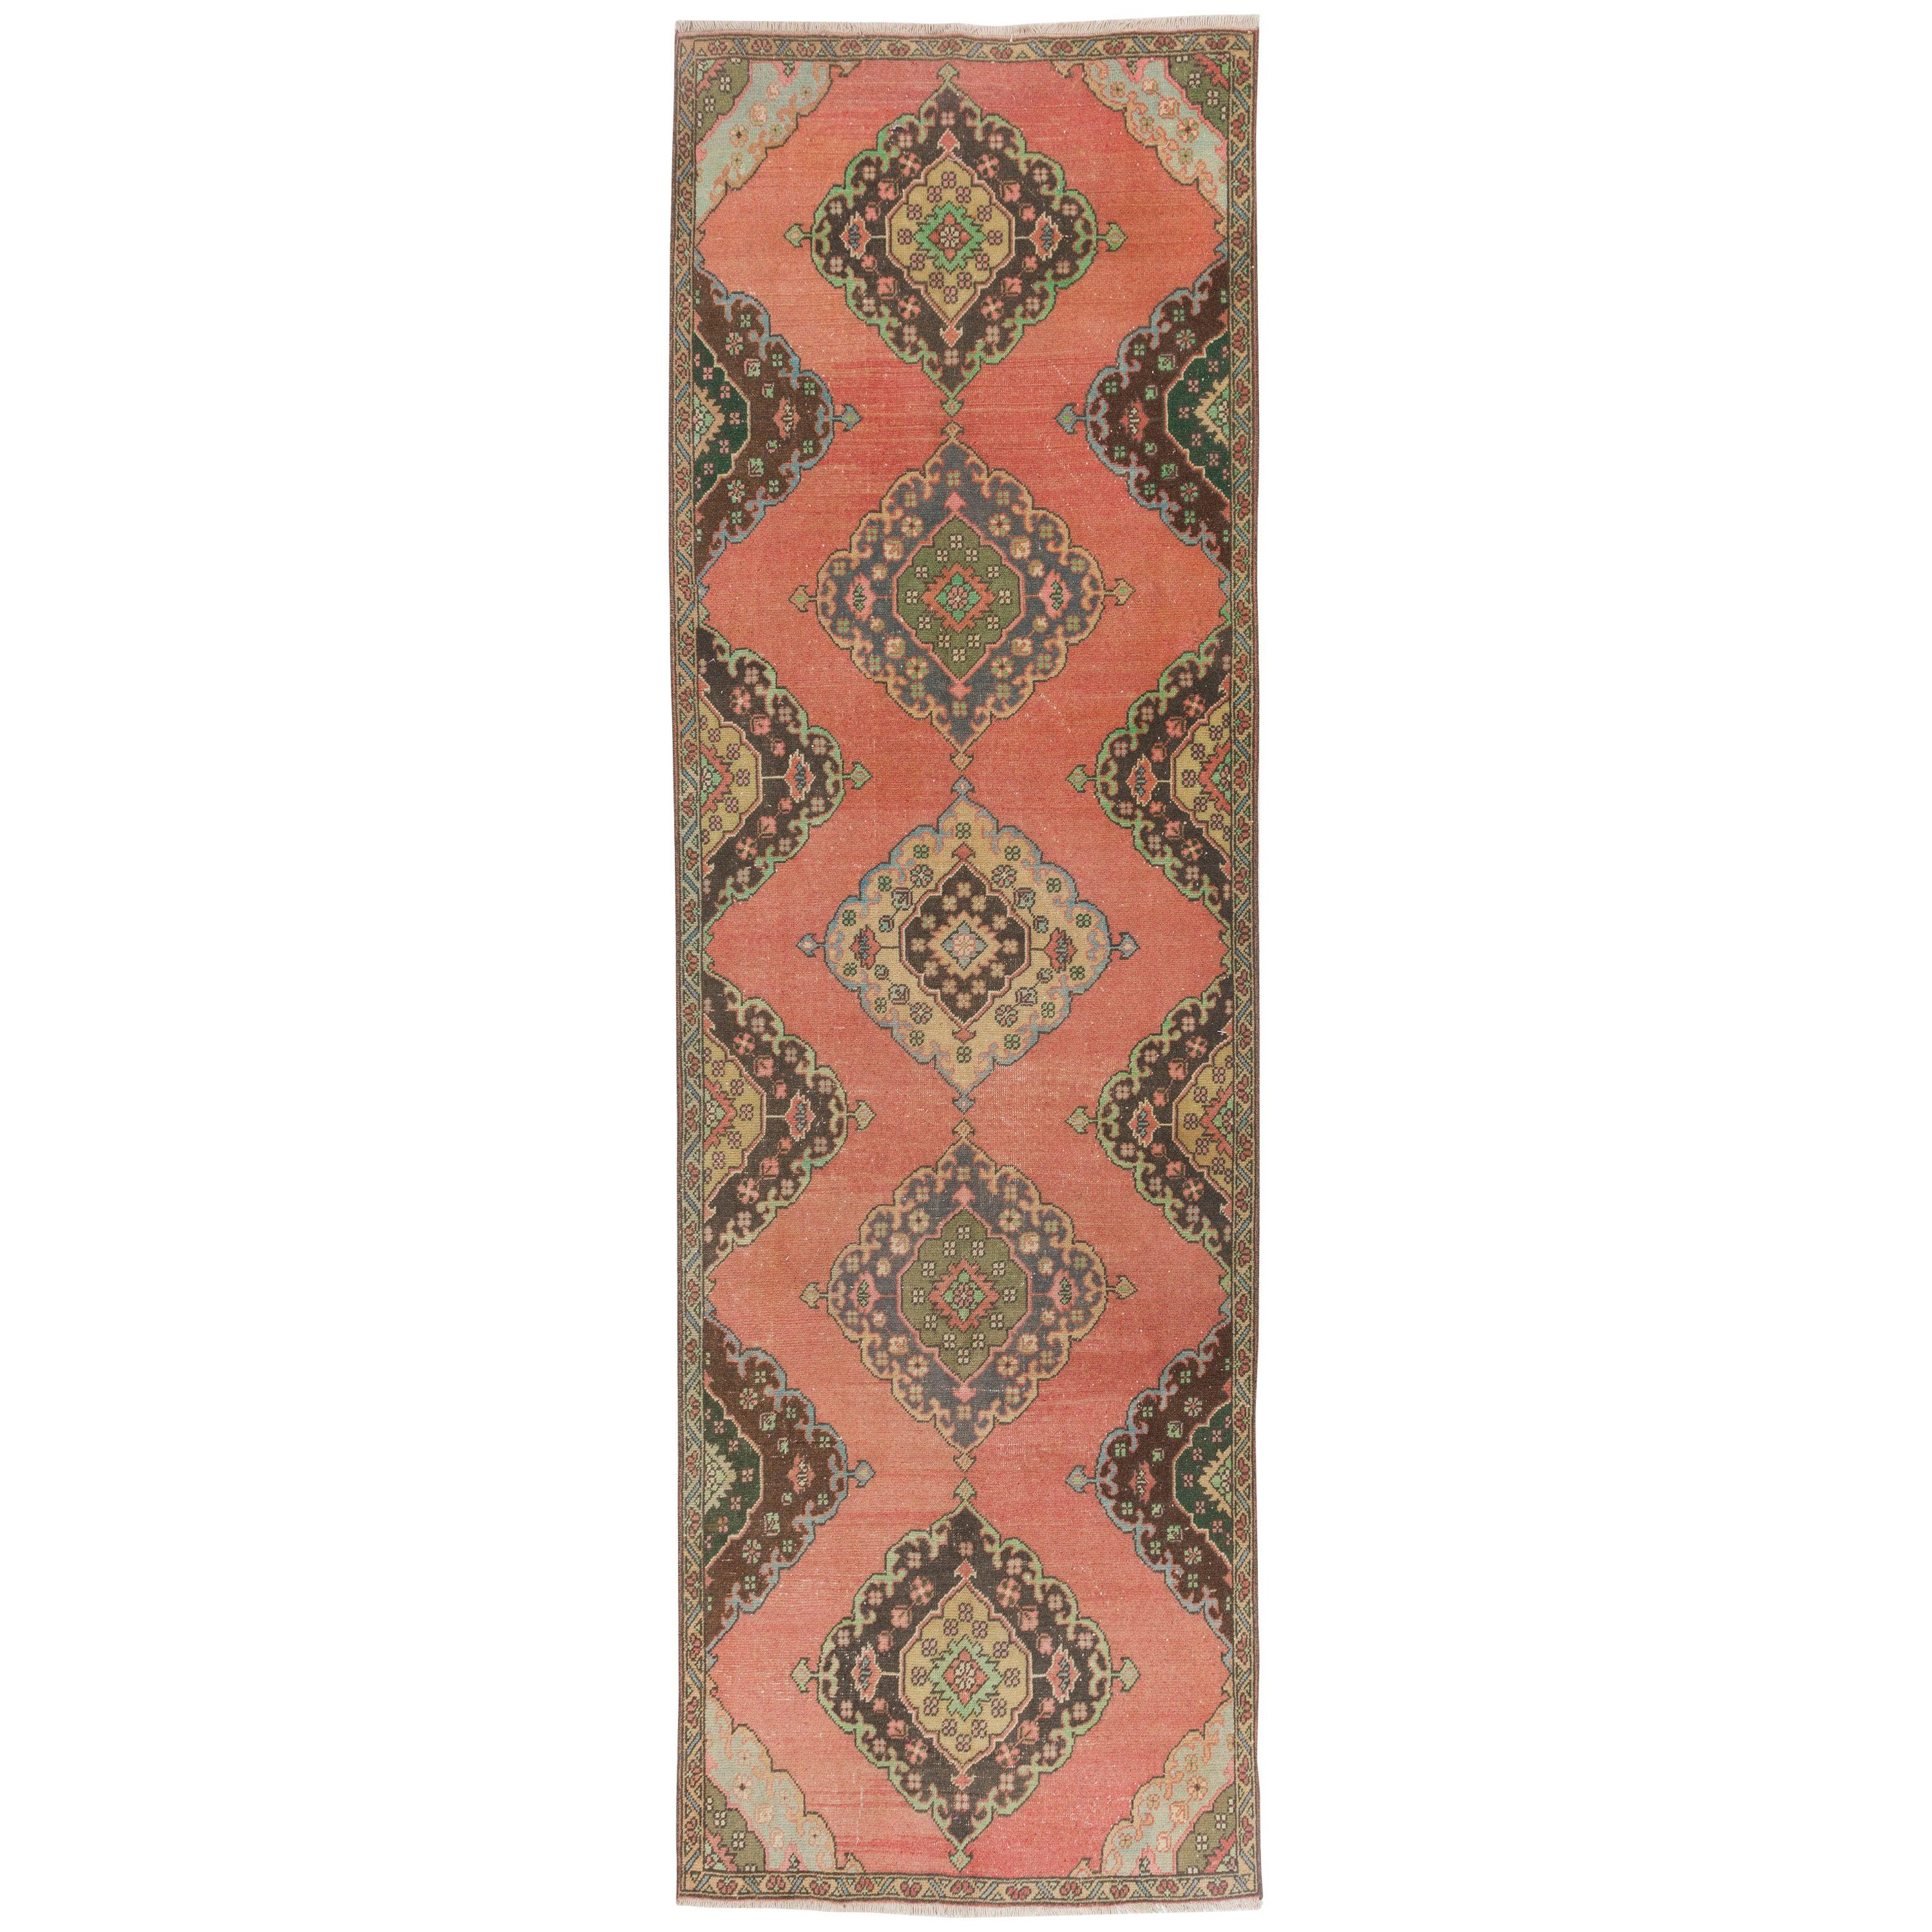 3.7x11.5 Ft Vintage Handmade Turkish Runner Rug, Wool Hallway Carpet